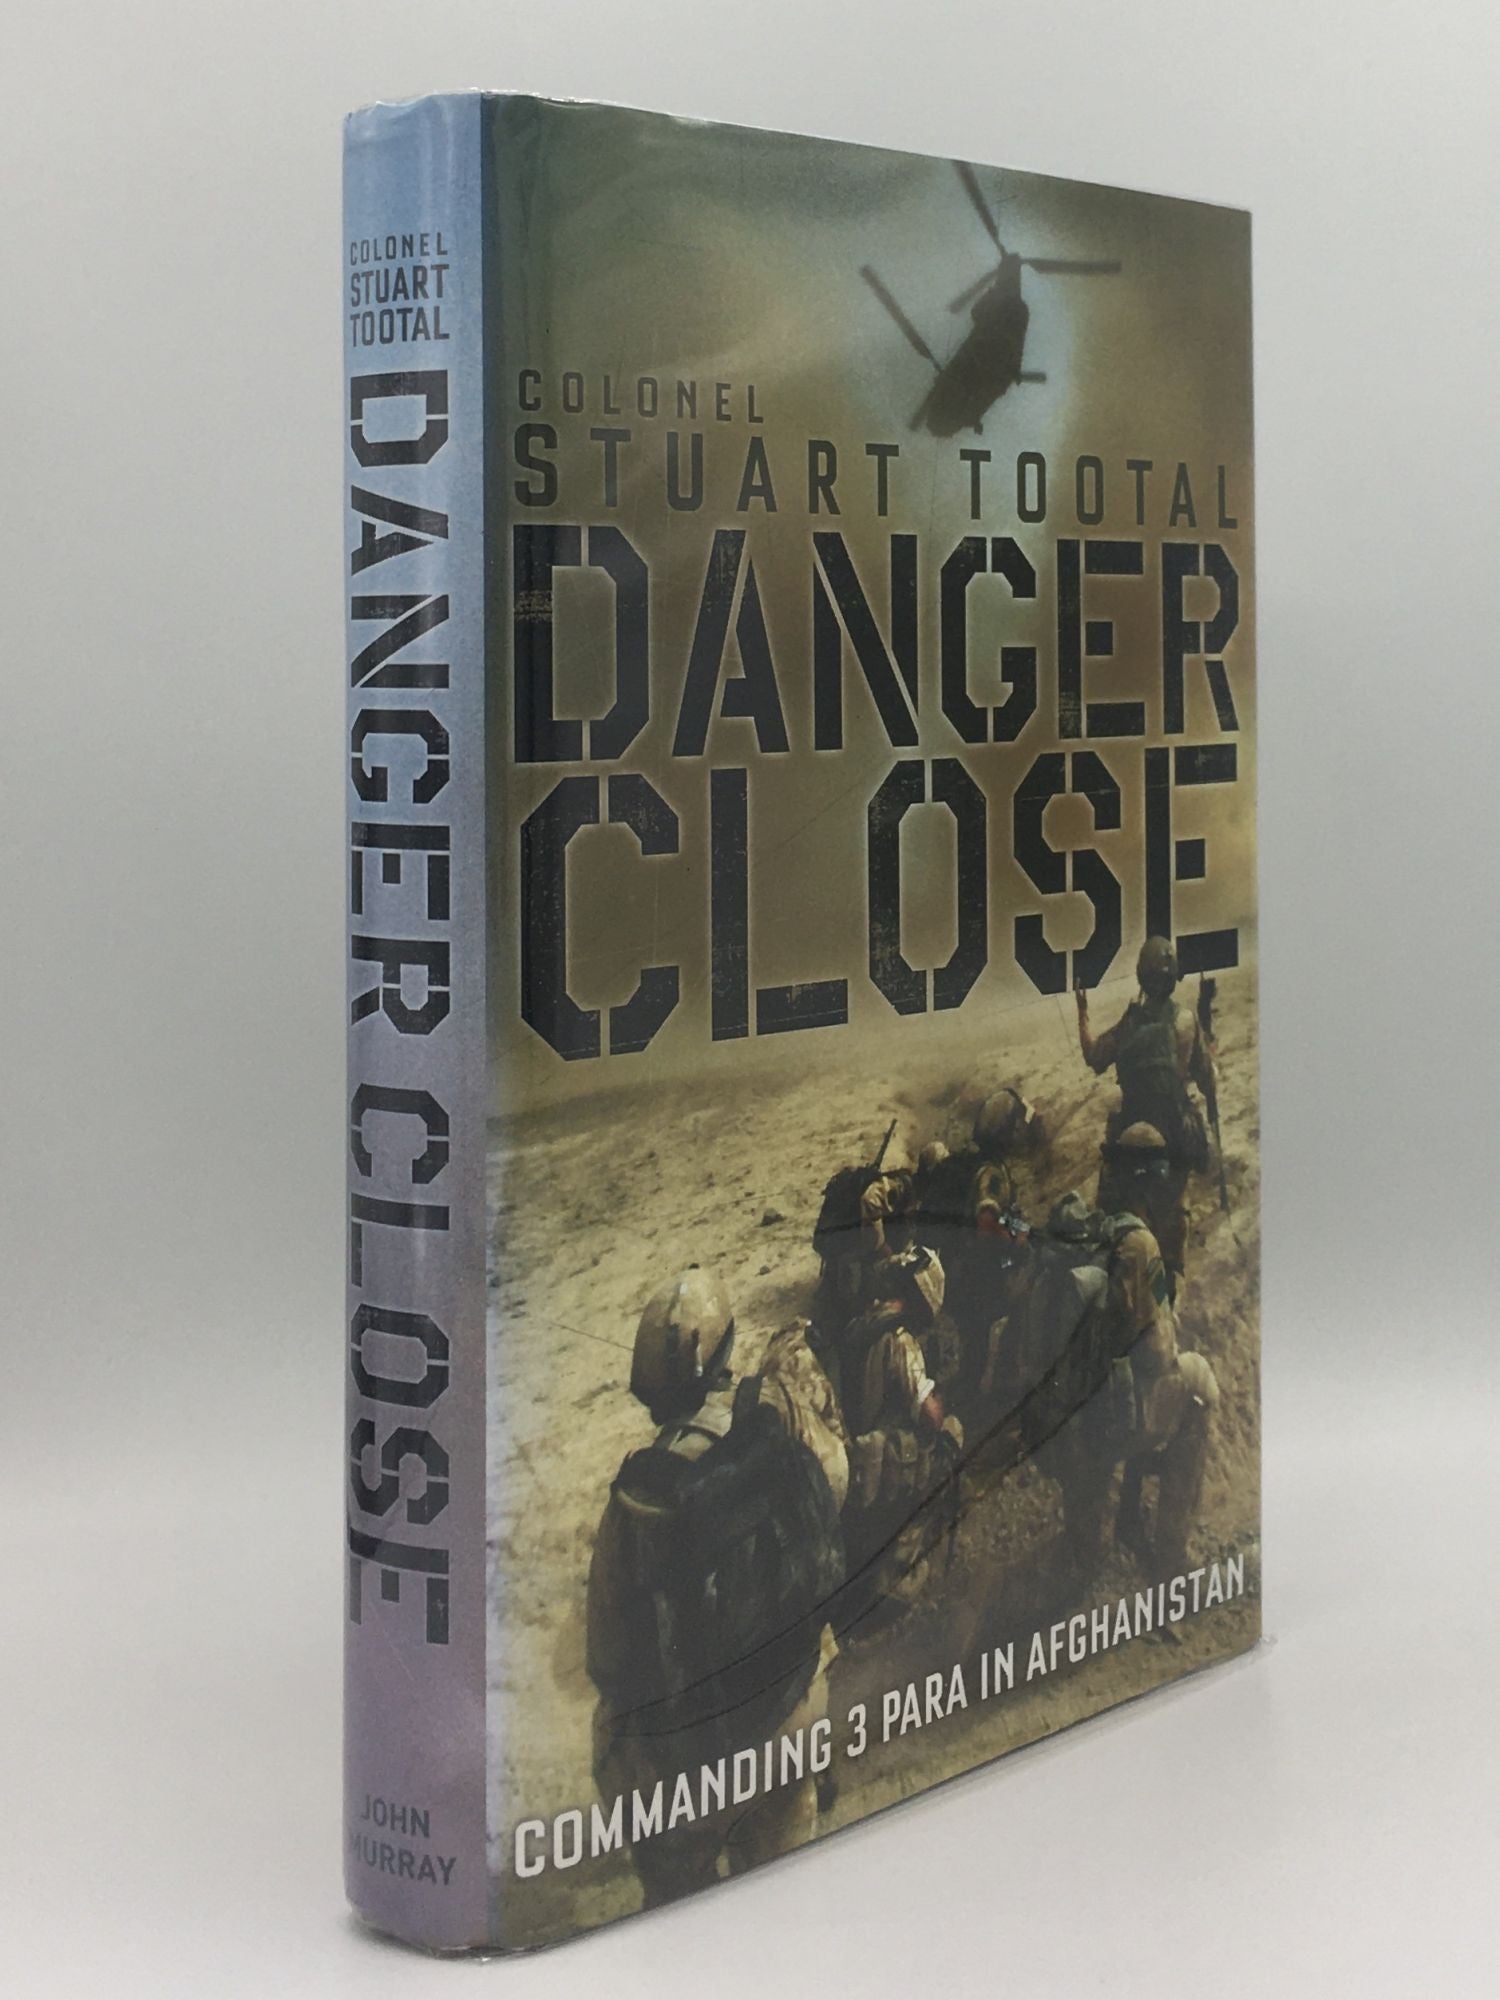 TOOTAL Colonel Stuart - Danger Close Commanding 3 Para in Afghnaistan